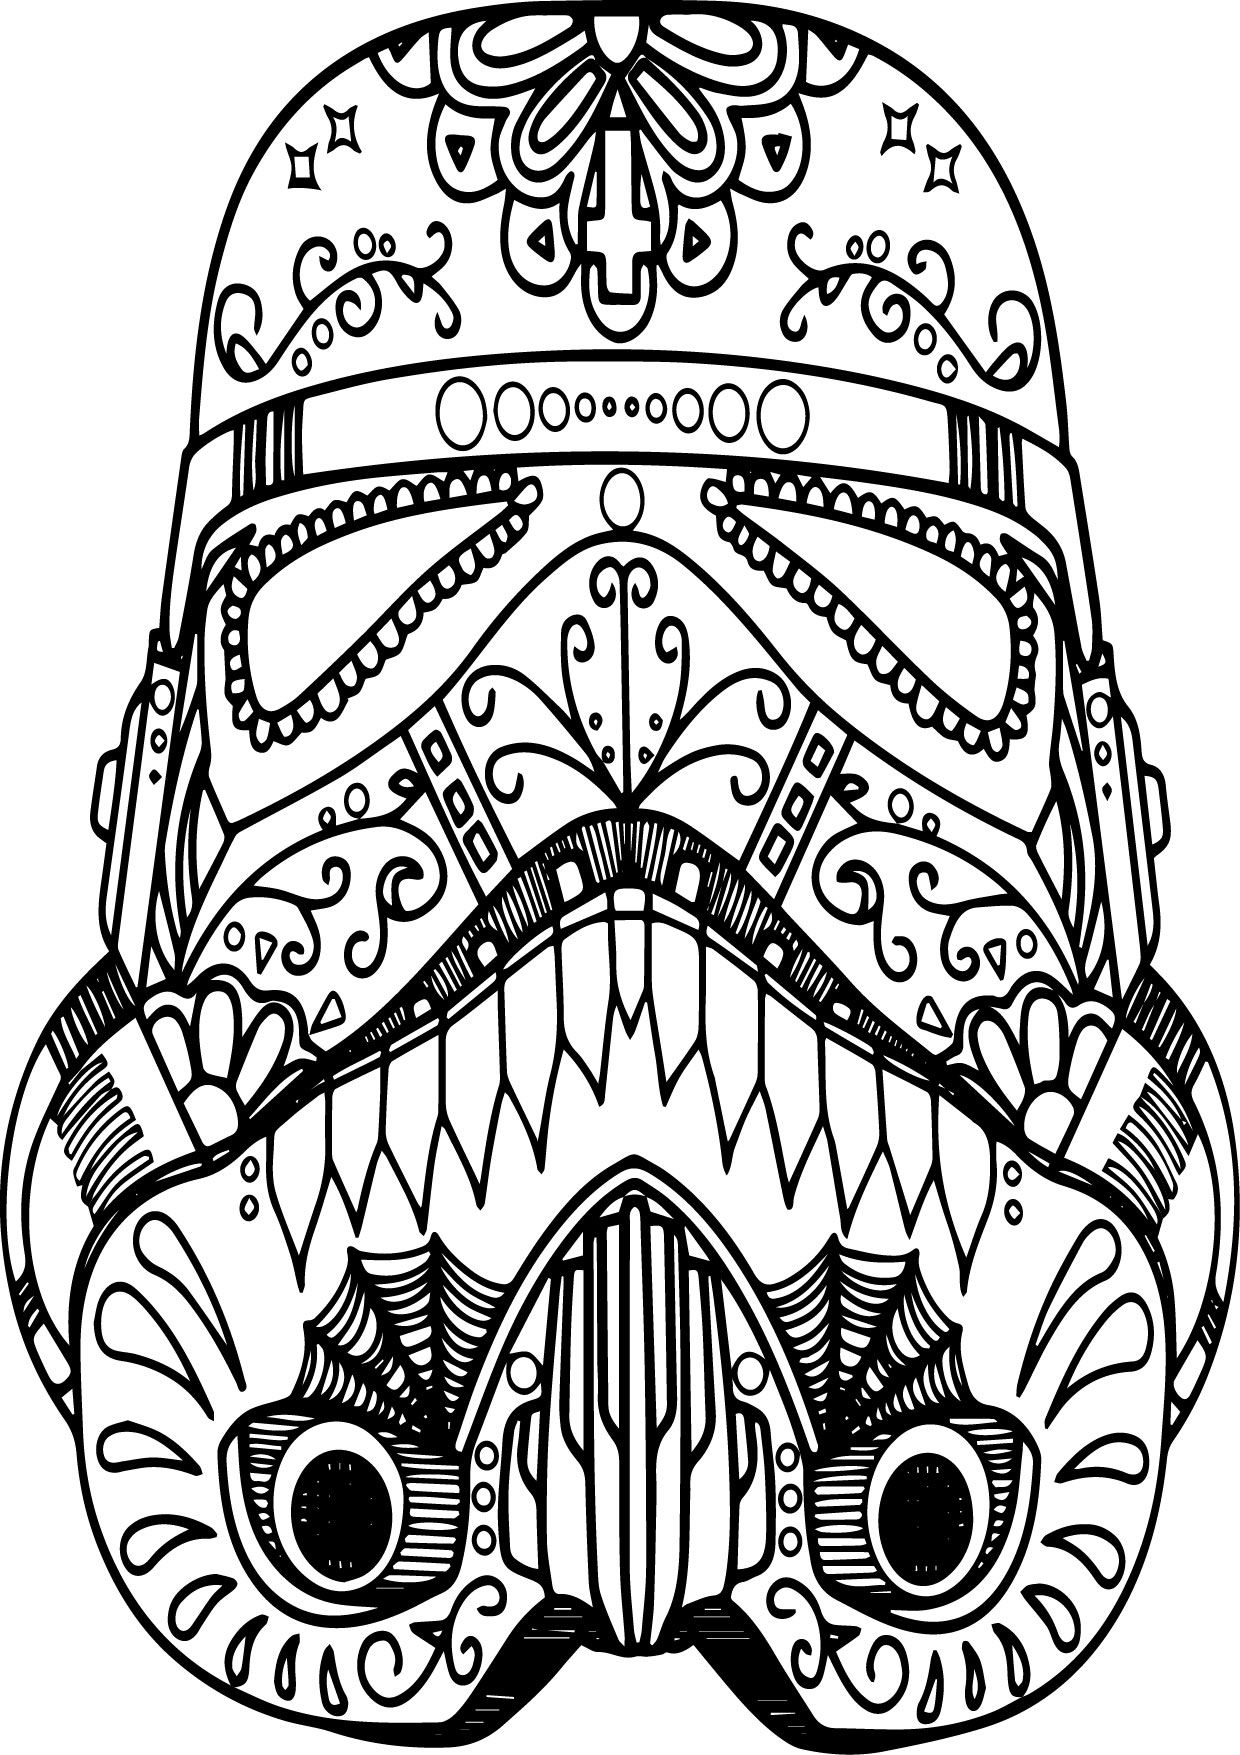 Mandala Skull Coloring Pages at GetColorings.com | Free printable